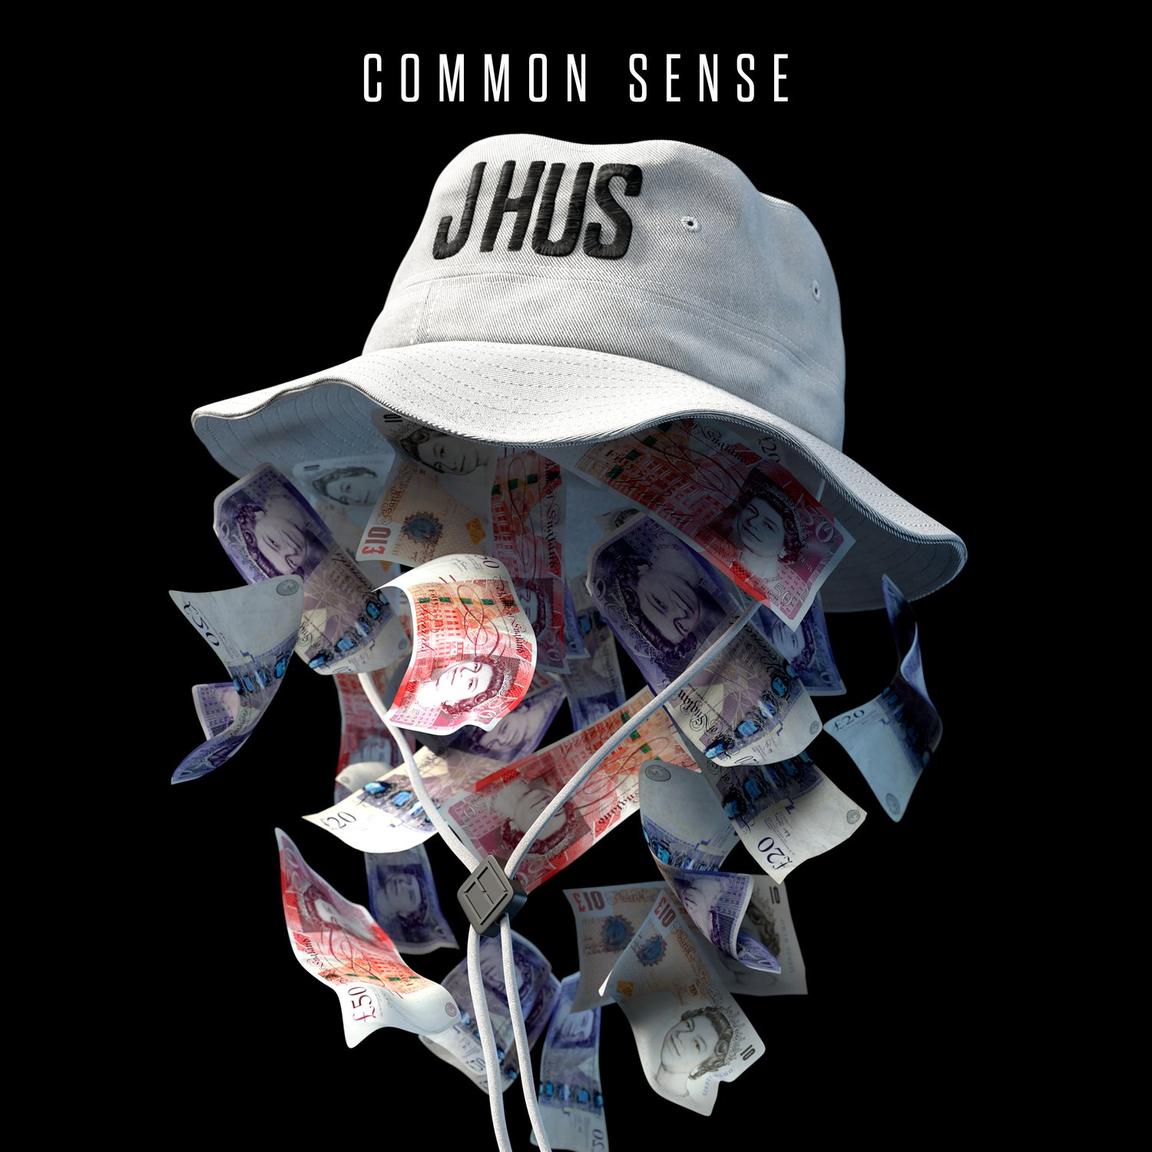 J Hus / Common Sense